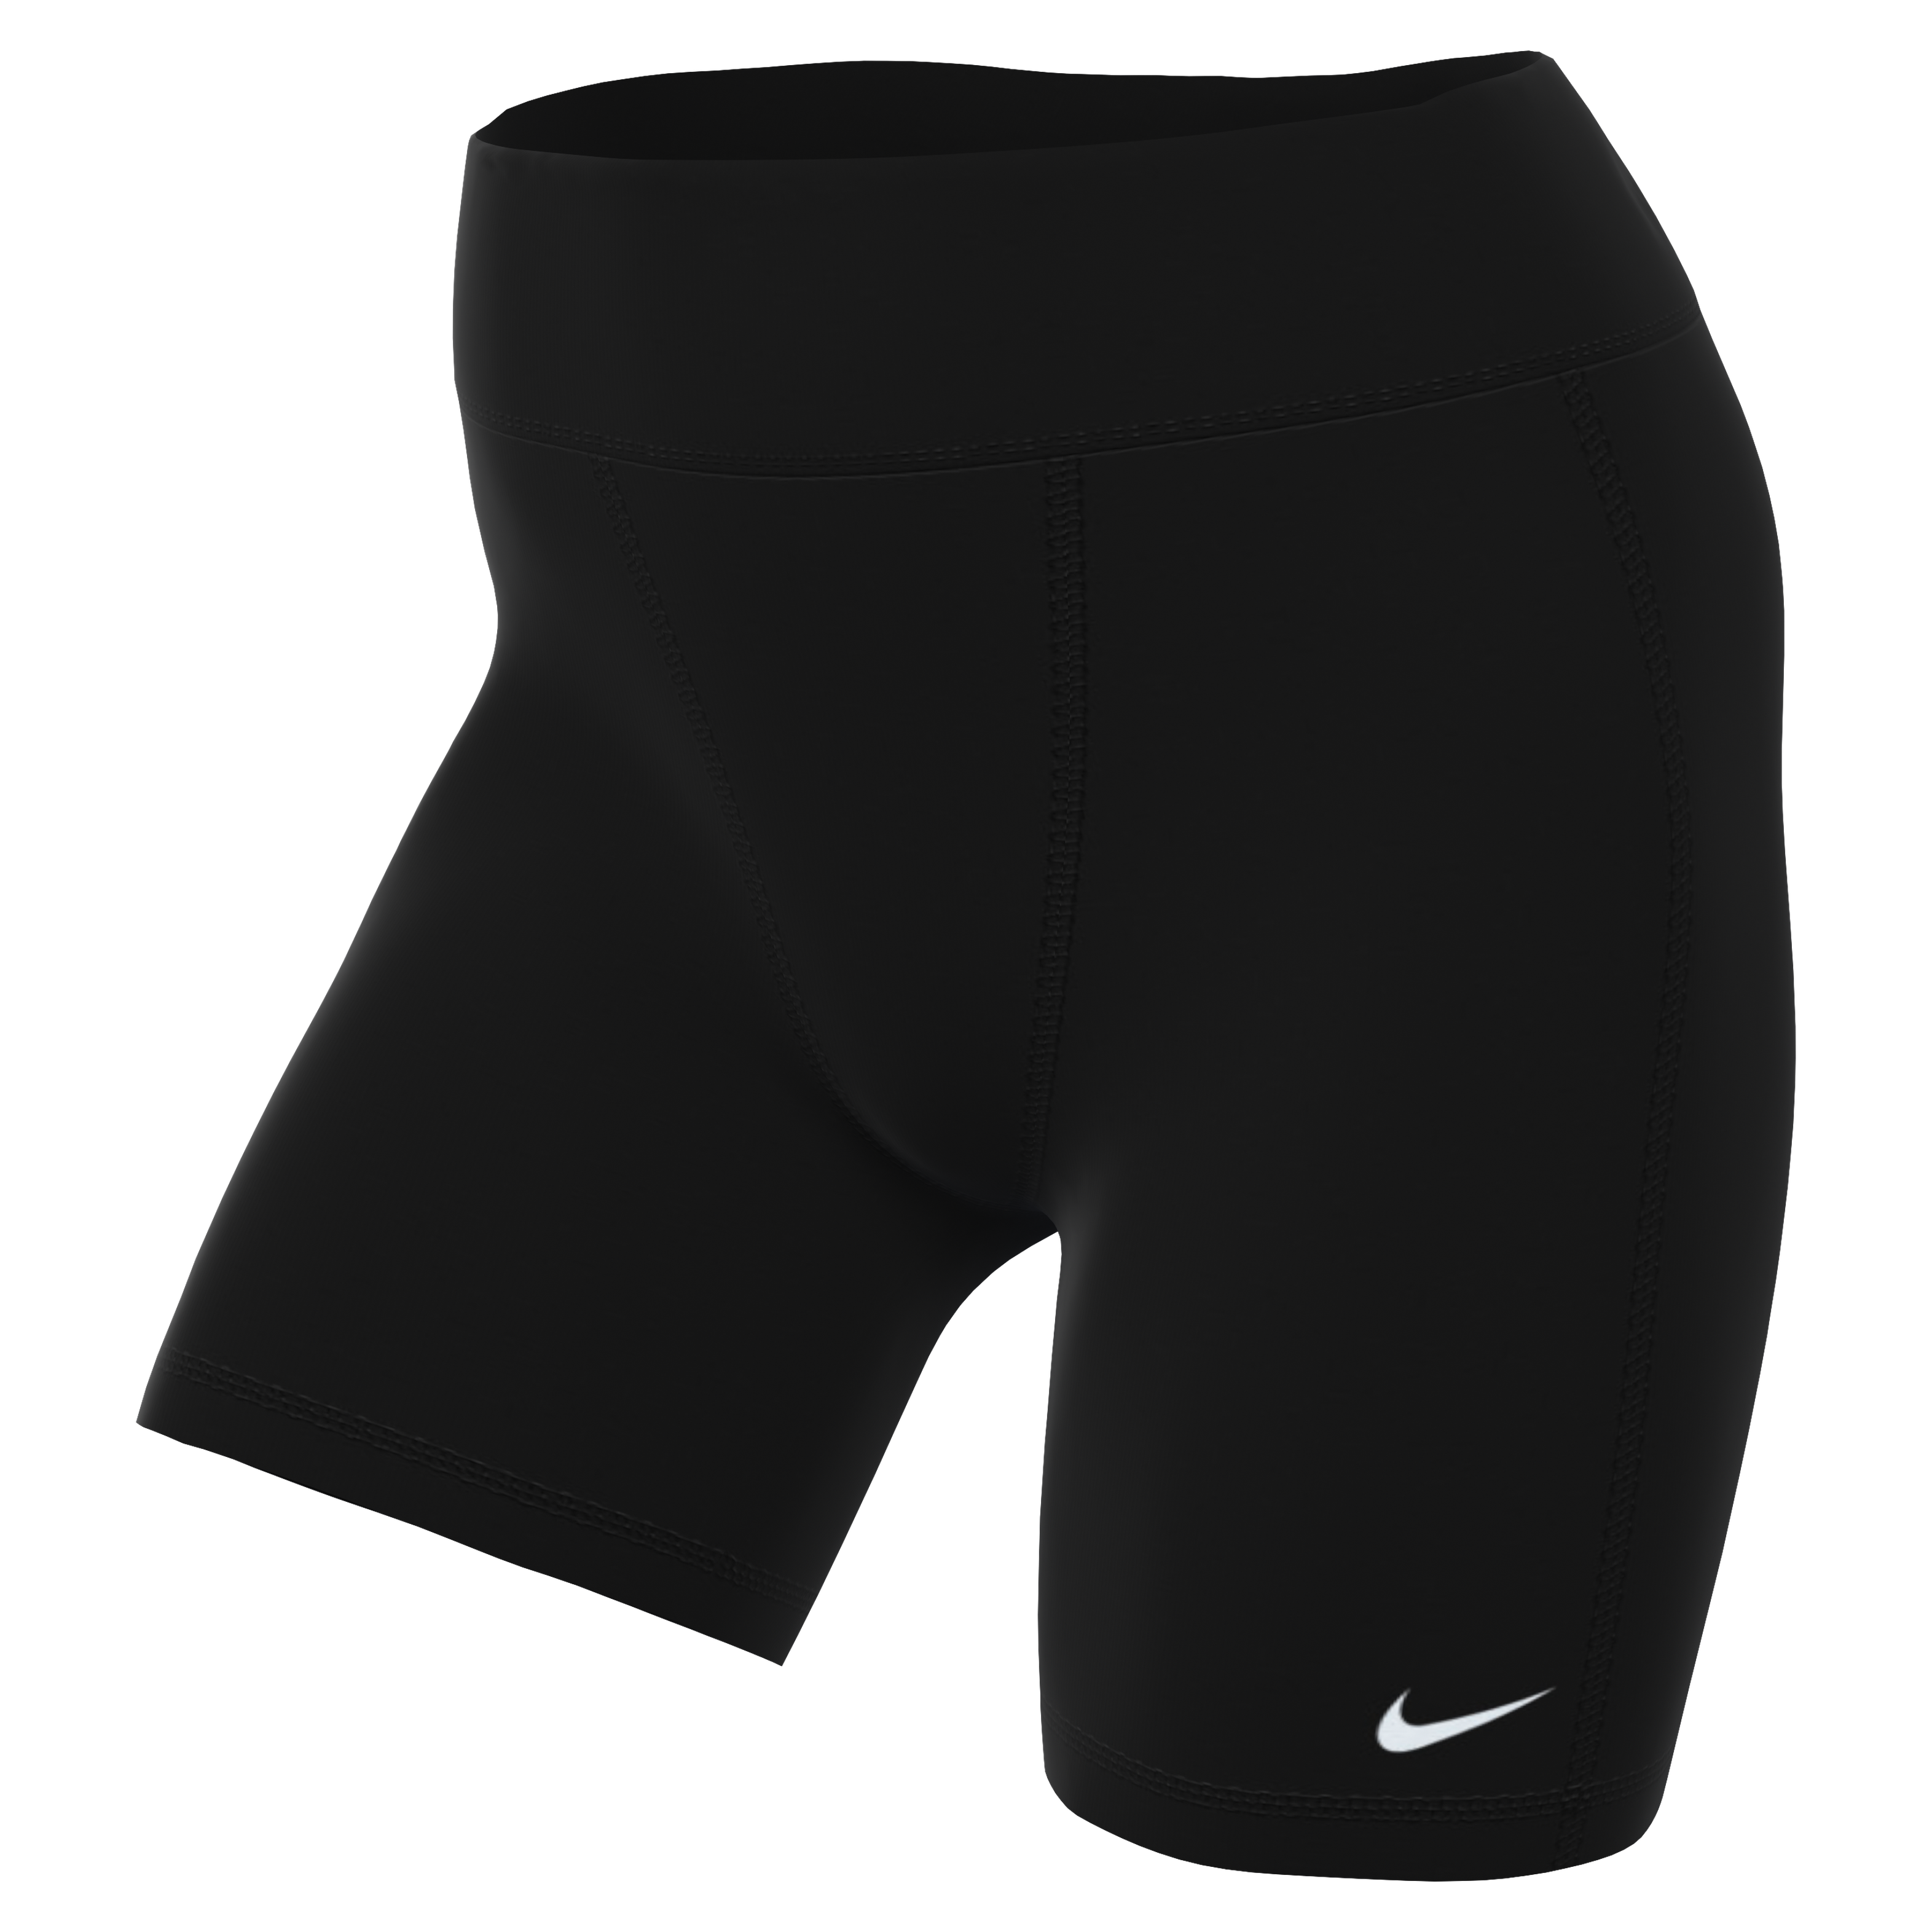 Nike Pro Leak Protections Shorts Women's 6in Soccer Shorts